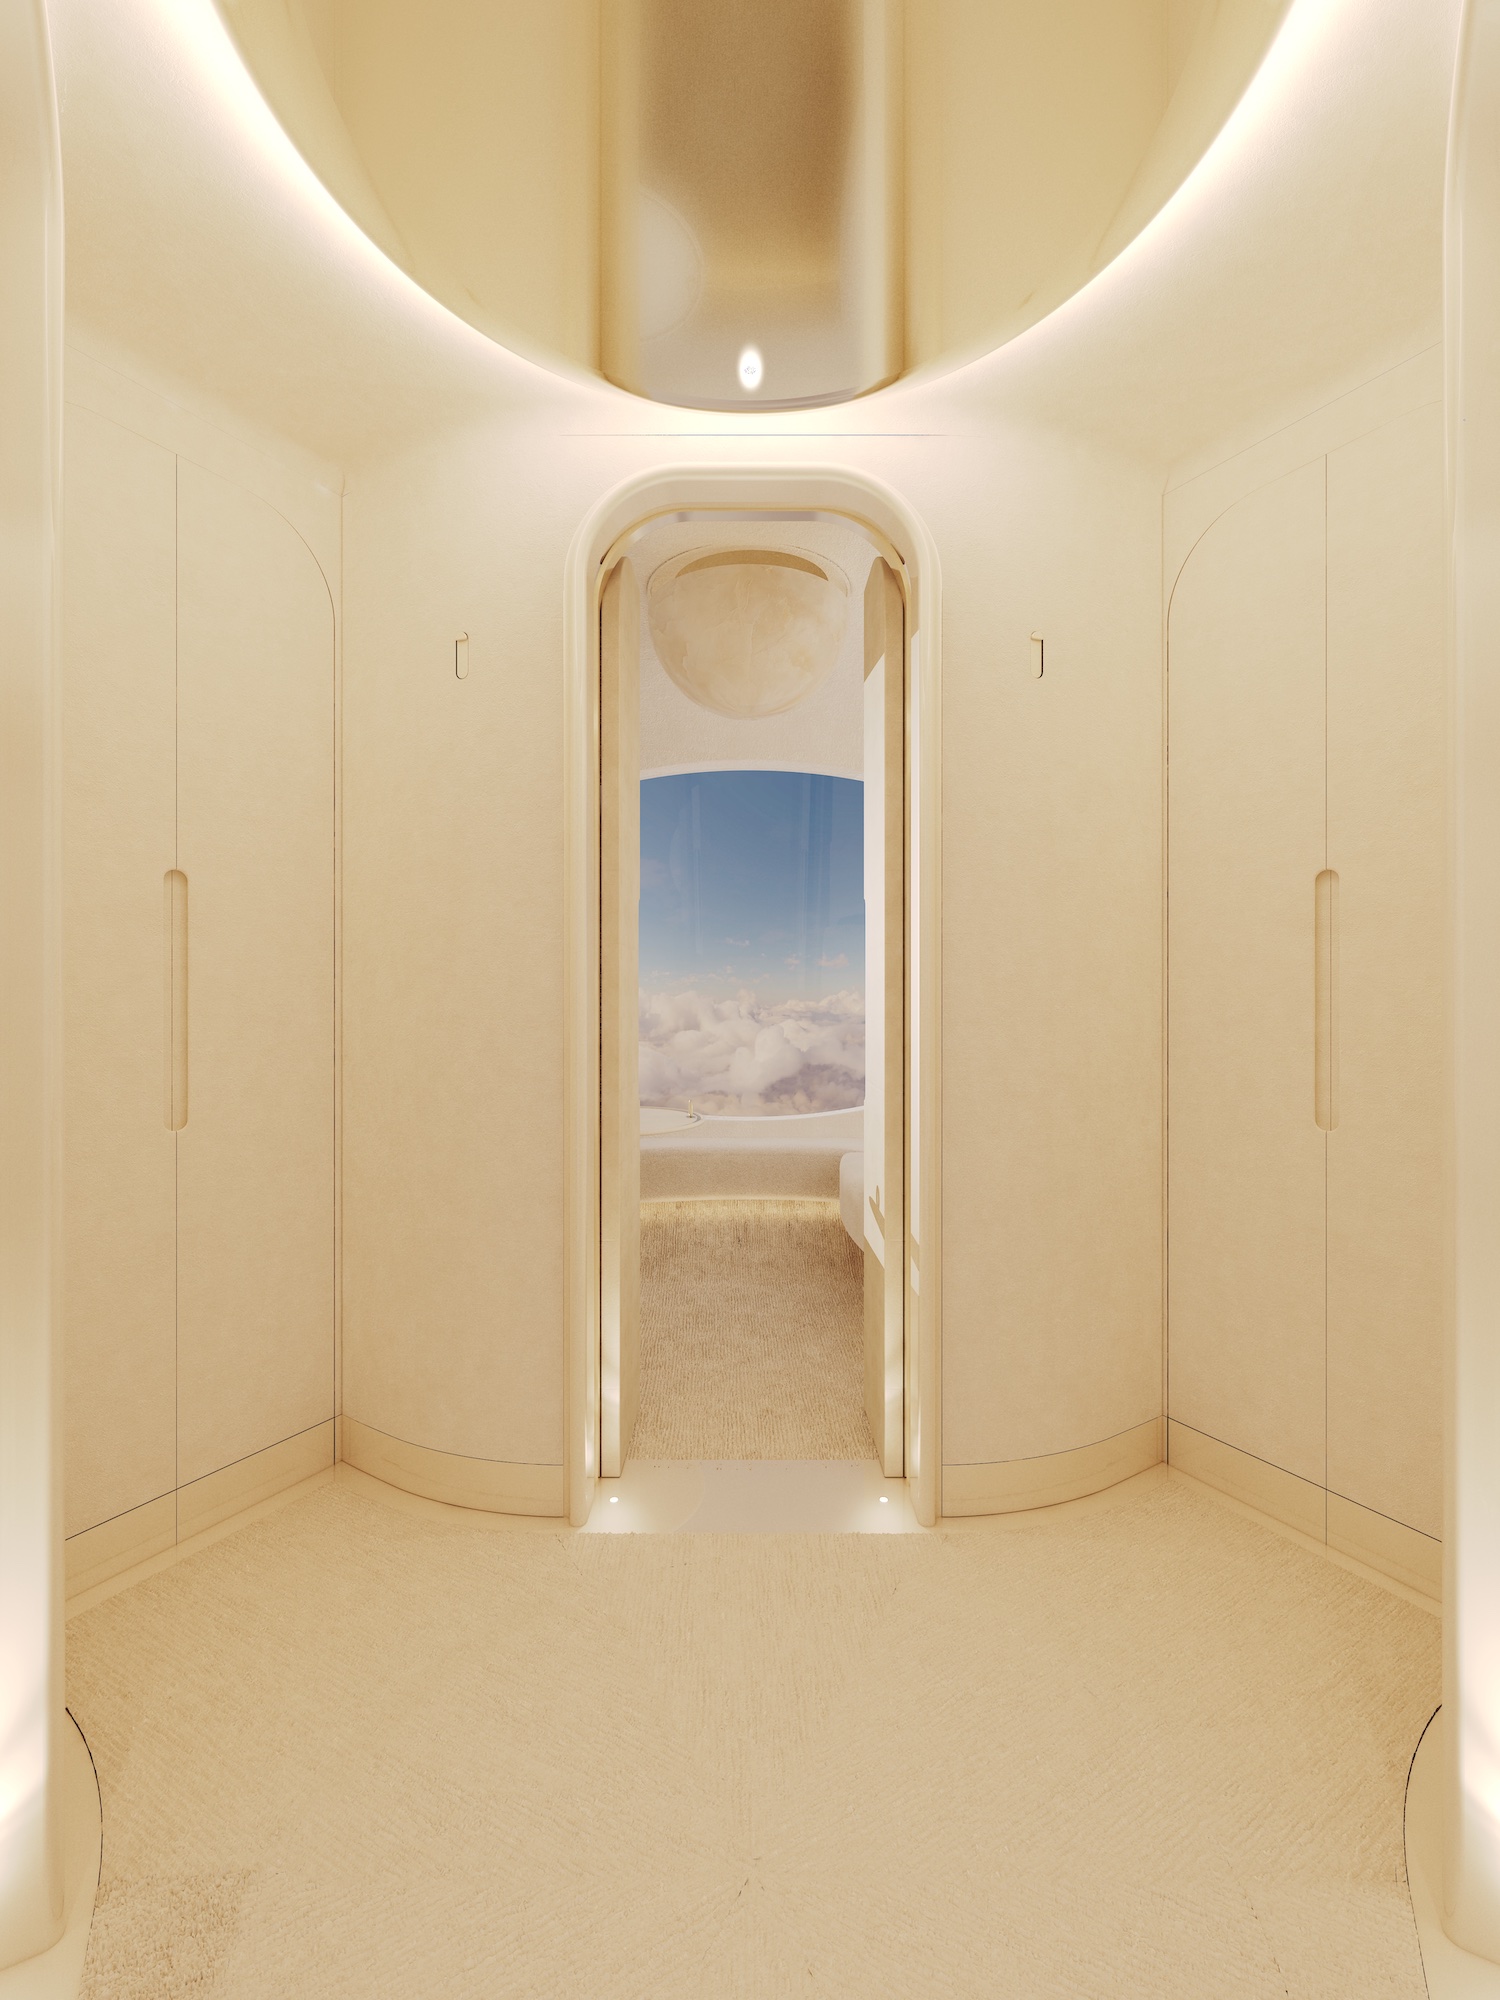 Interior lobby of the Zephalto space capsule Céleste in Effect Magazine